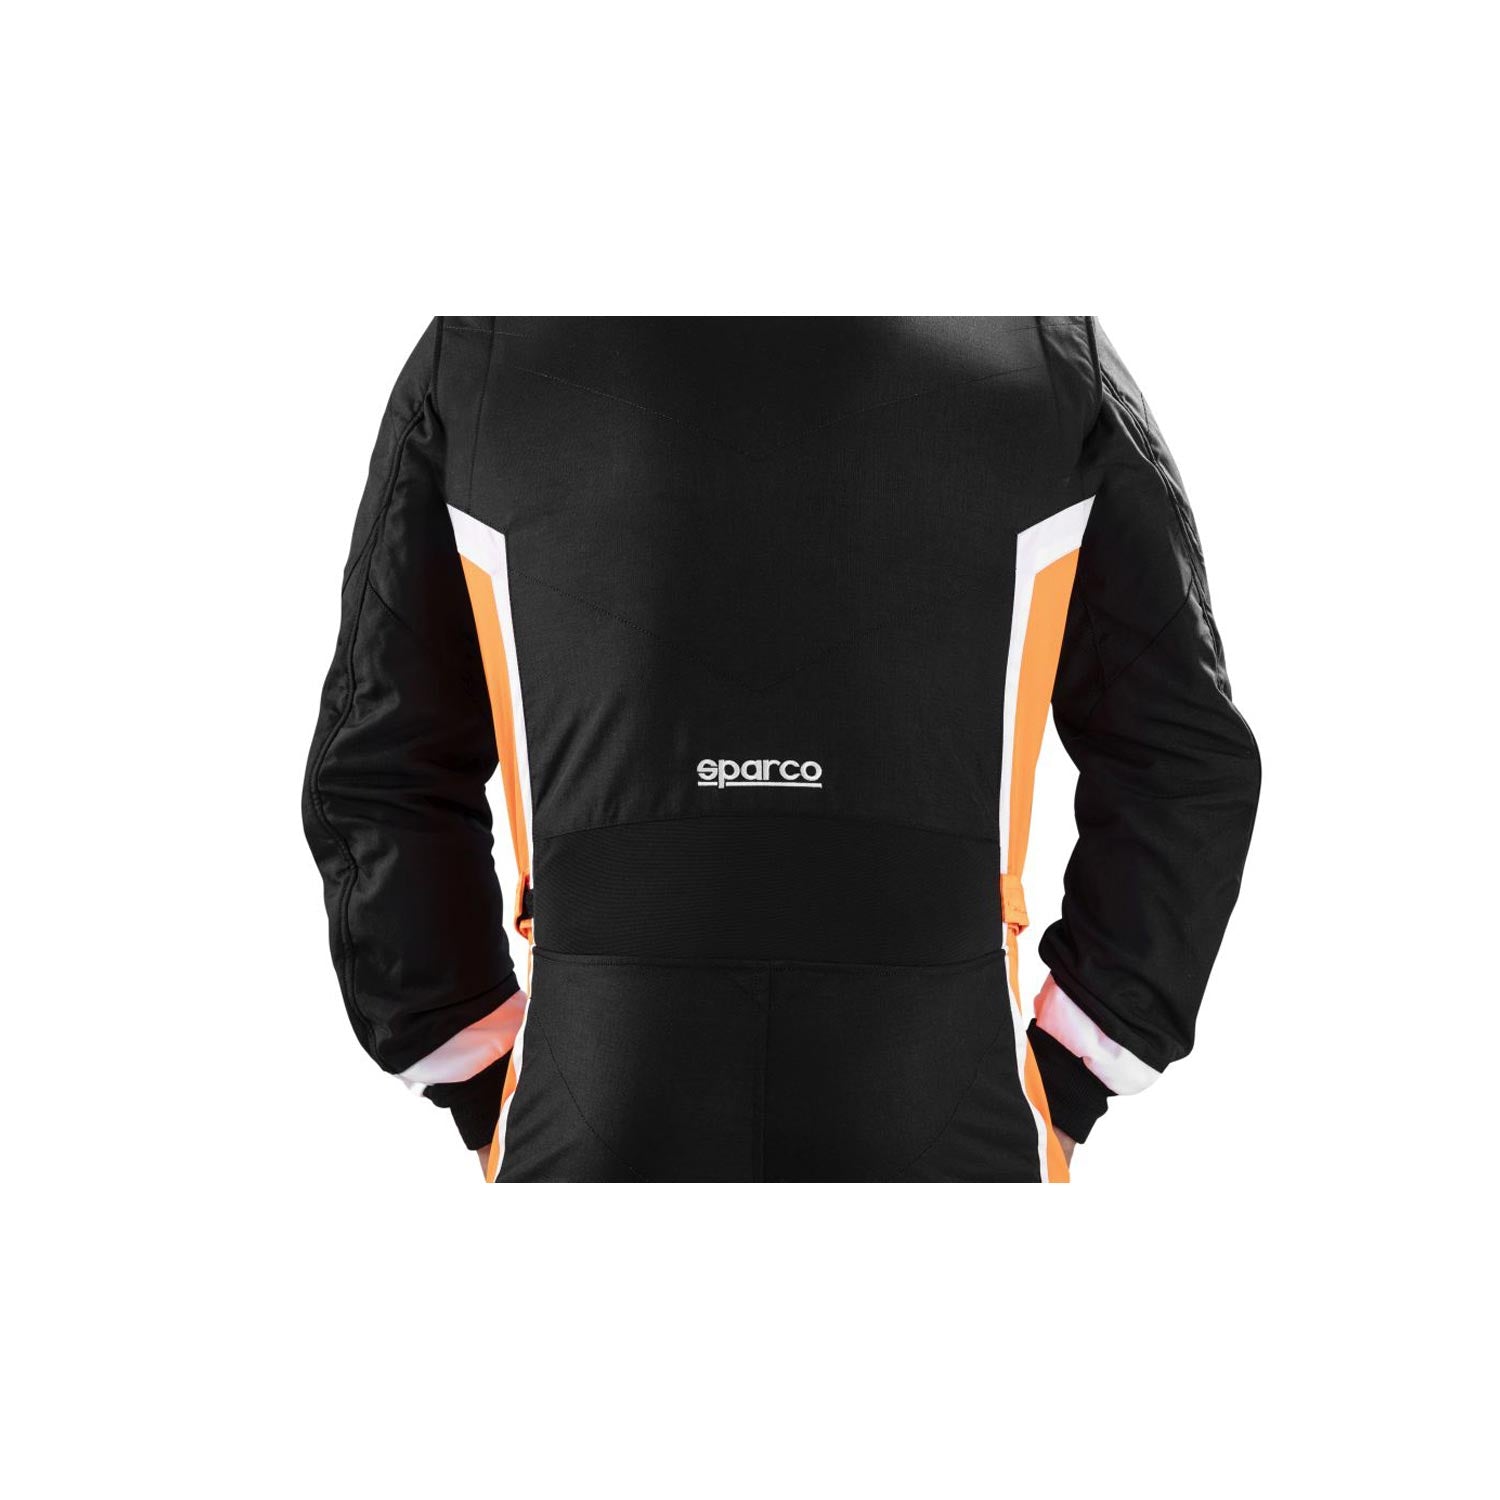 Sparco Suit Thunder Black Orange - Racing Fashion